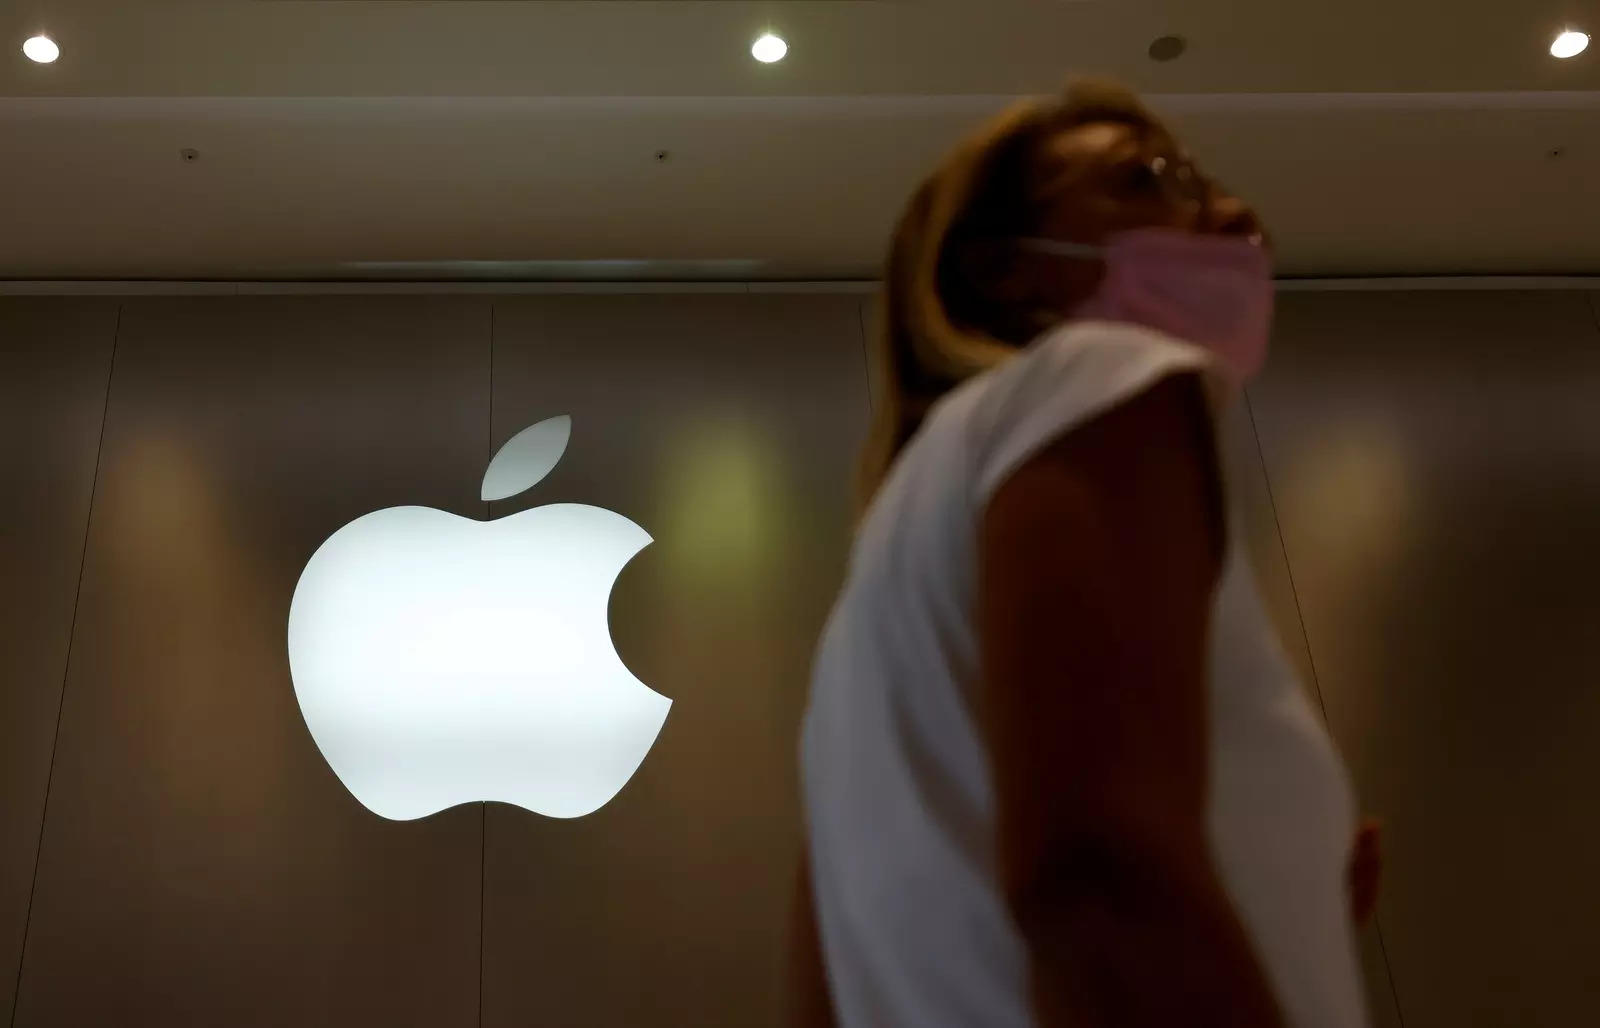 Australian Commonwealth Bank mocks Apple's 'competition' bid